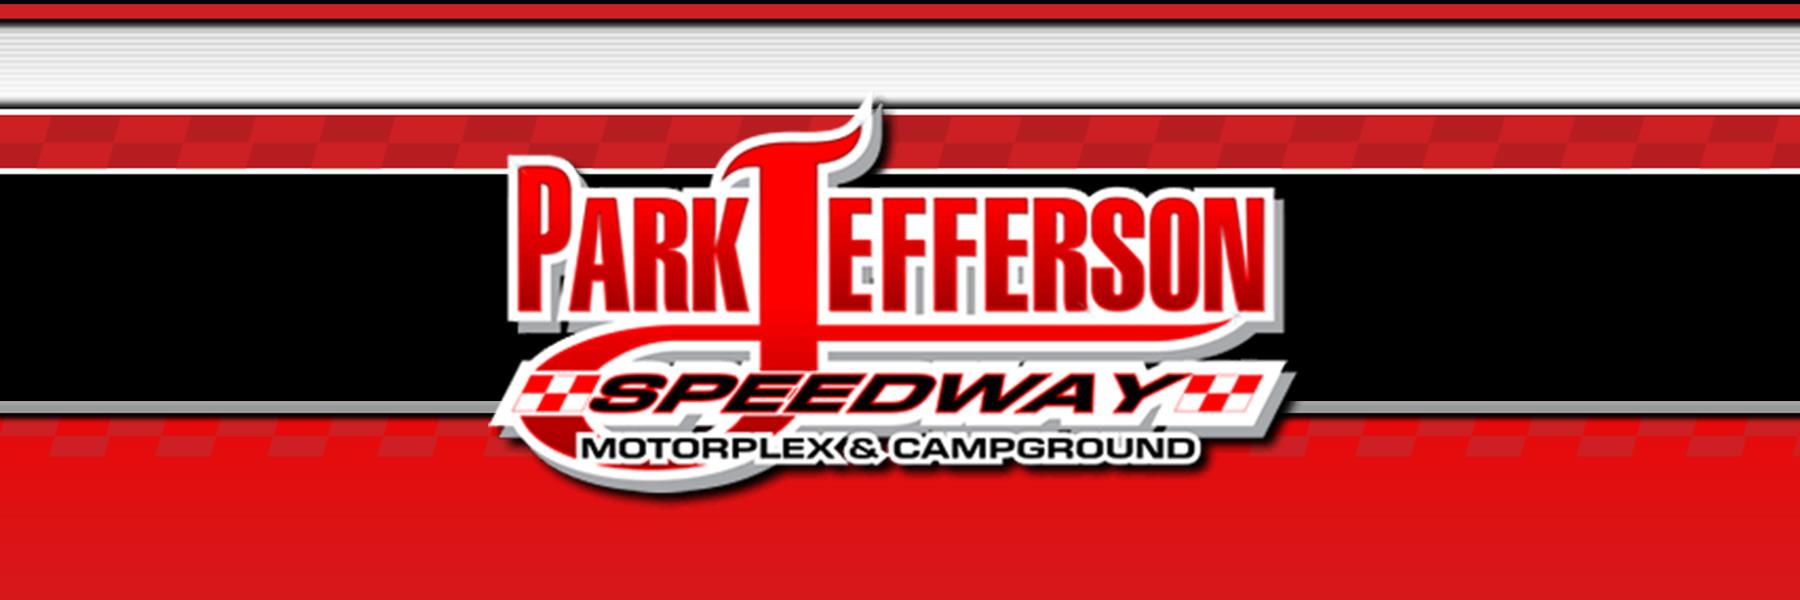 5/23/2020 - Park Jefferson International Speedway